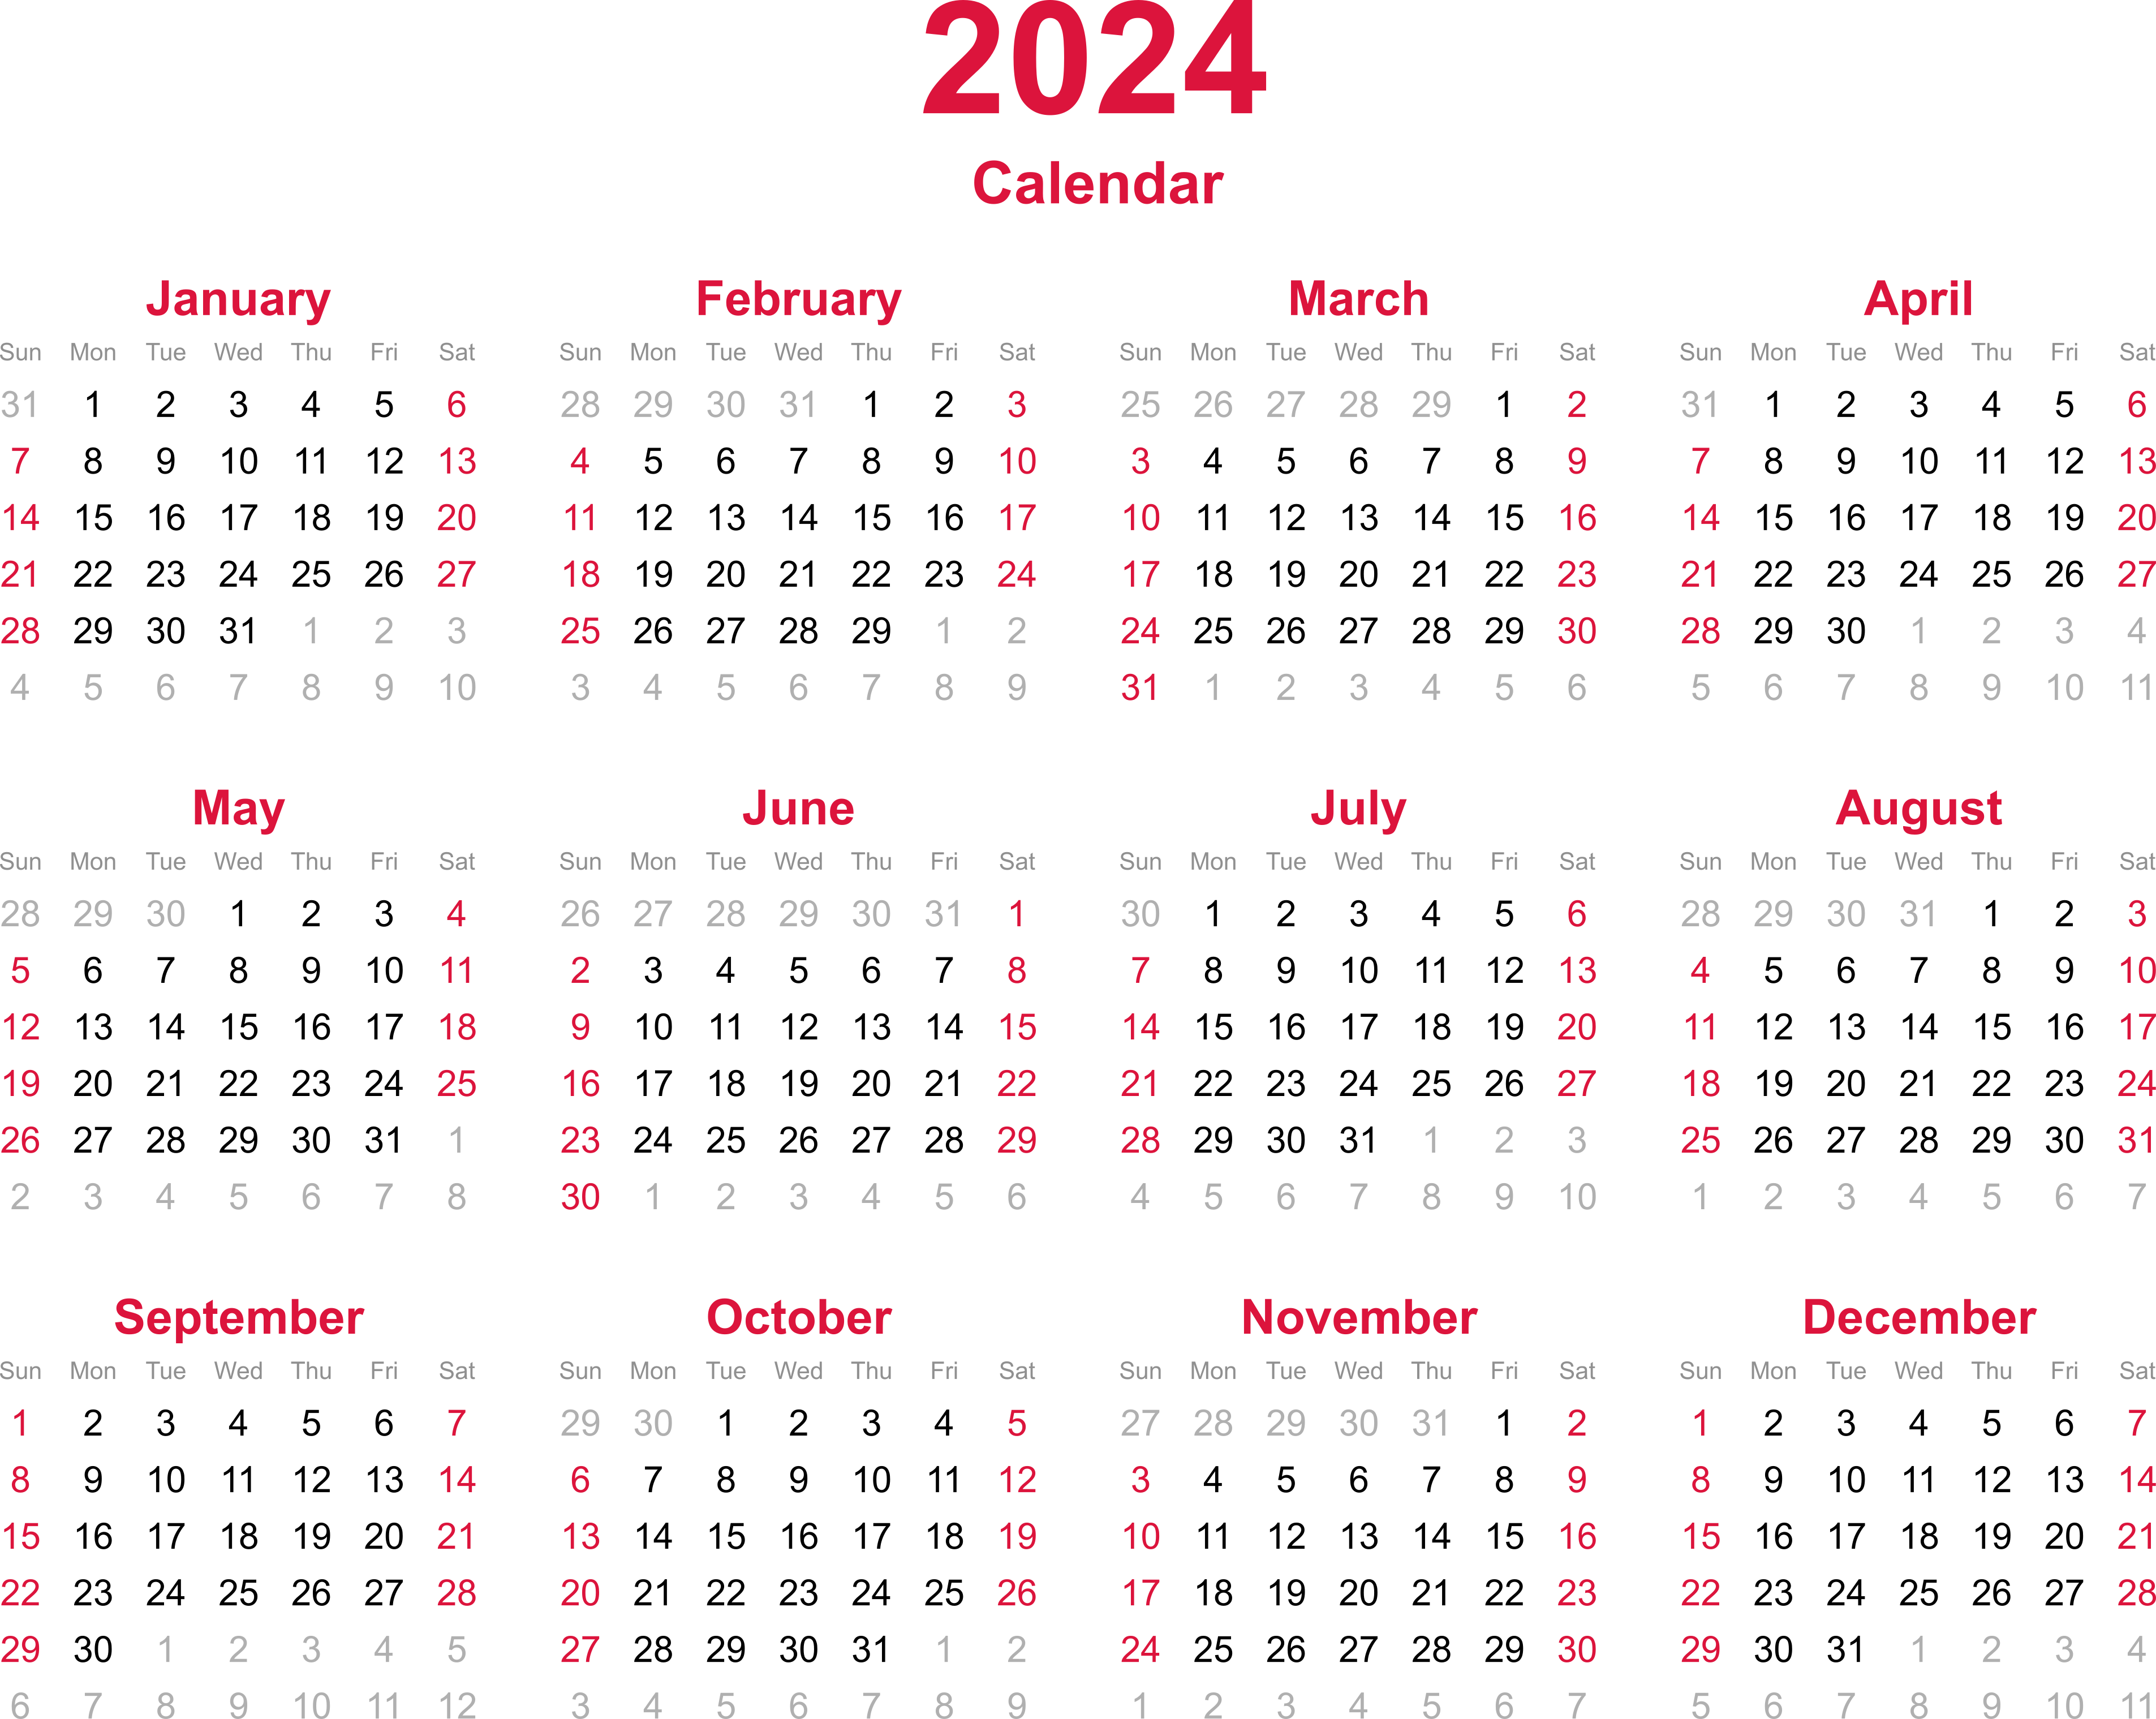 Calendar 2024 PNG Image